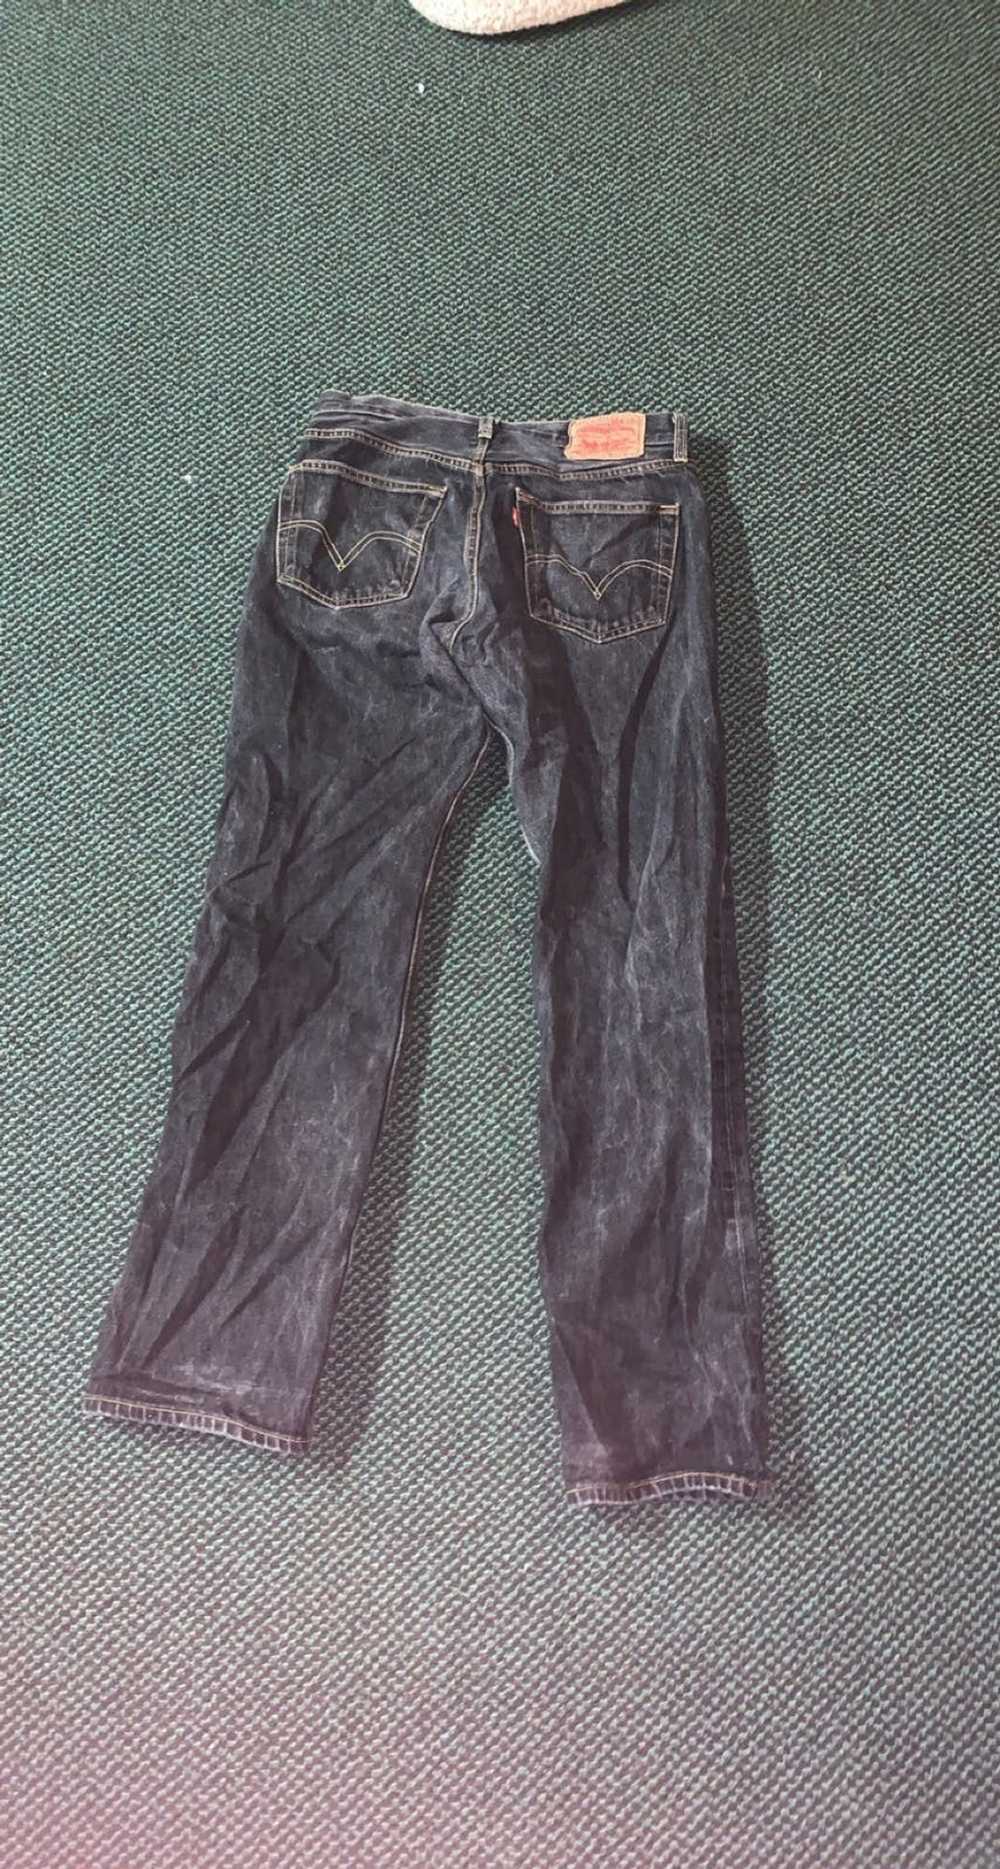 Levi's 90s Vintage 501 Levis Jeans Dark Wash - image 2